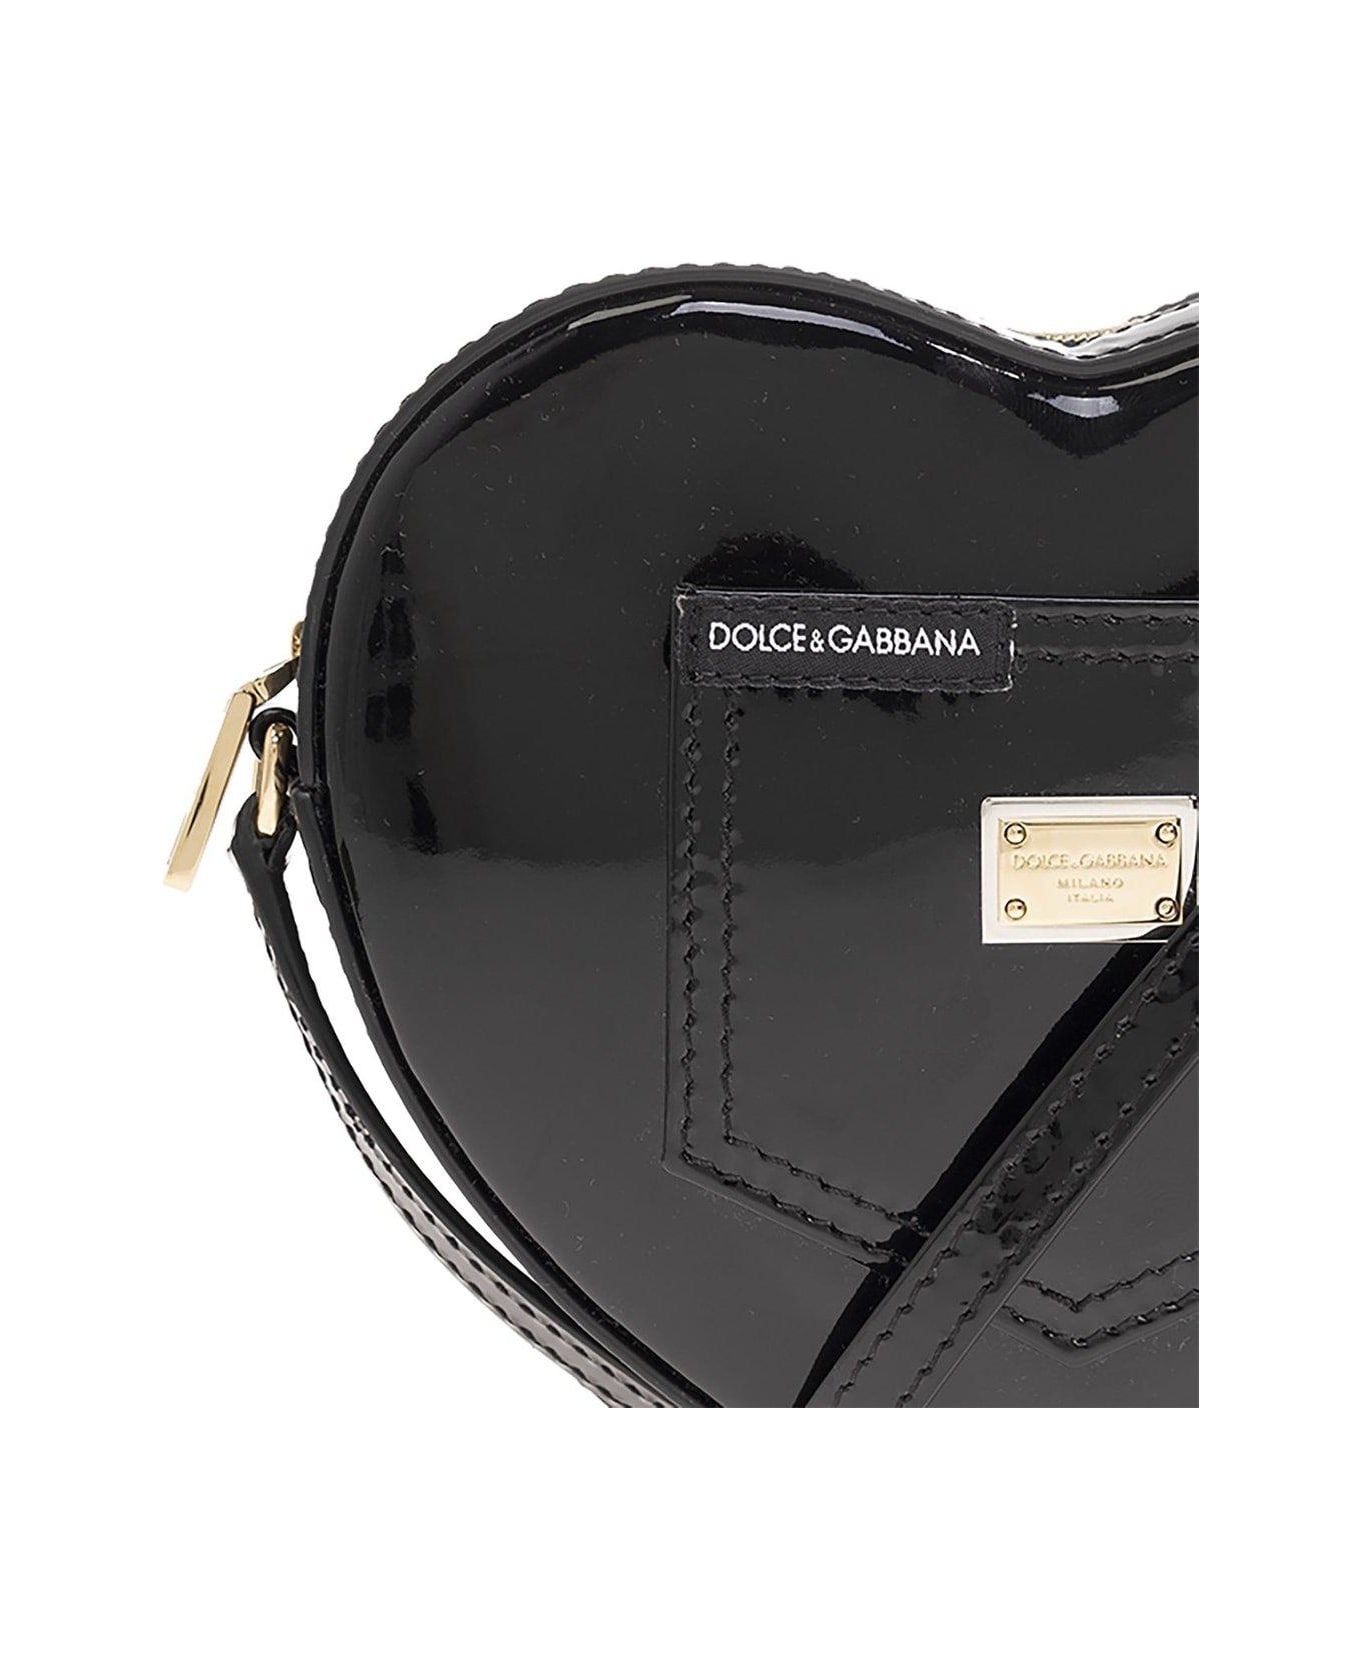 Dolce & Gabbana Heart Zipped Shoulder Bag - Nero